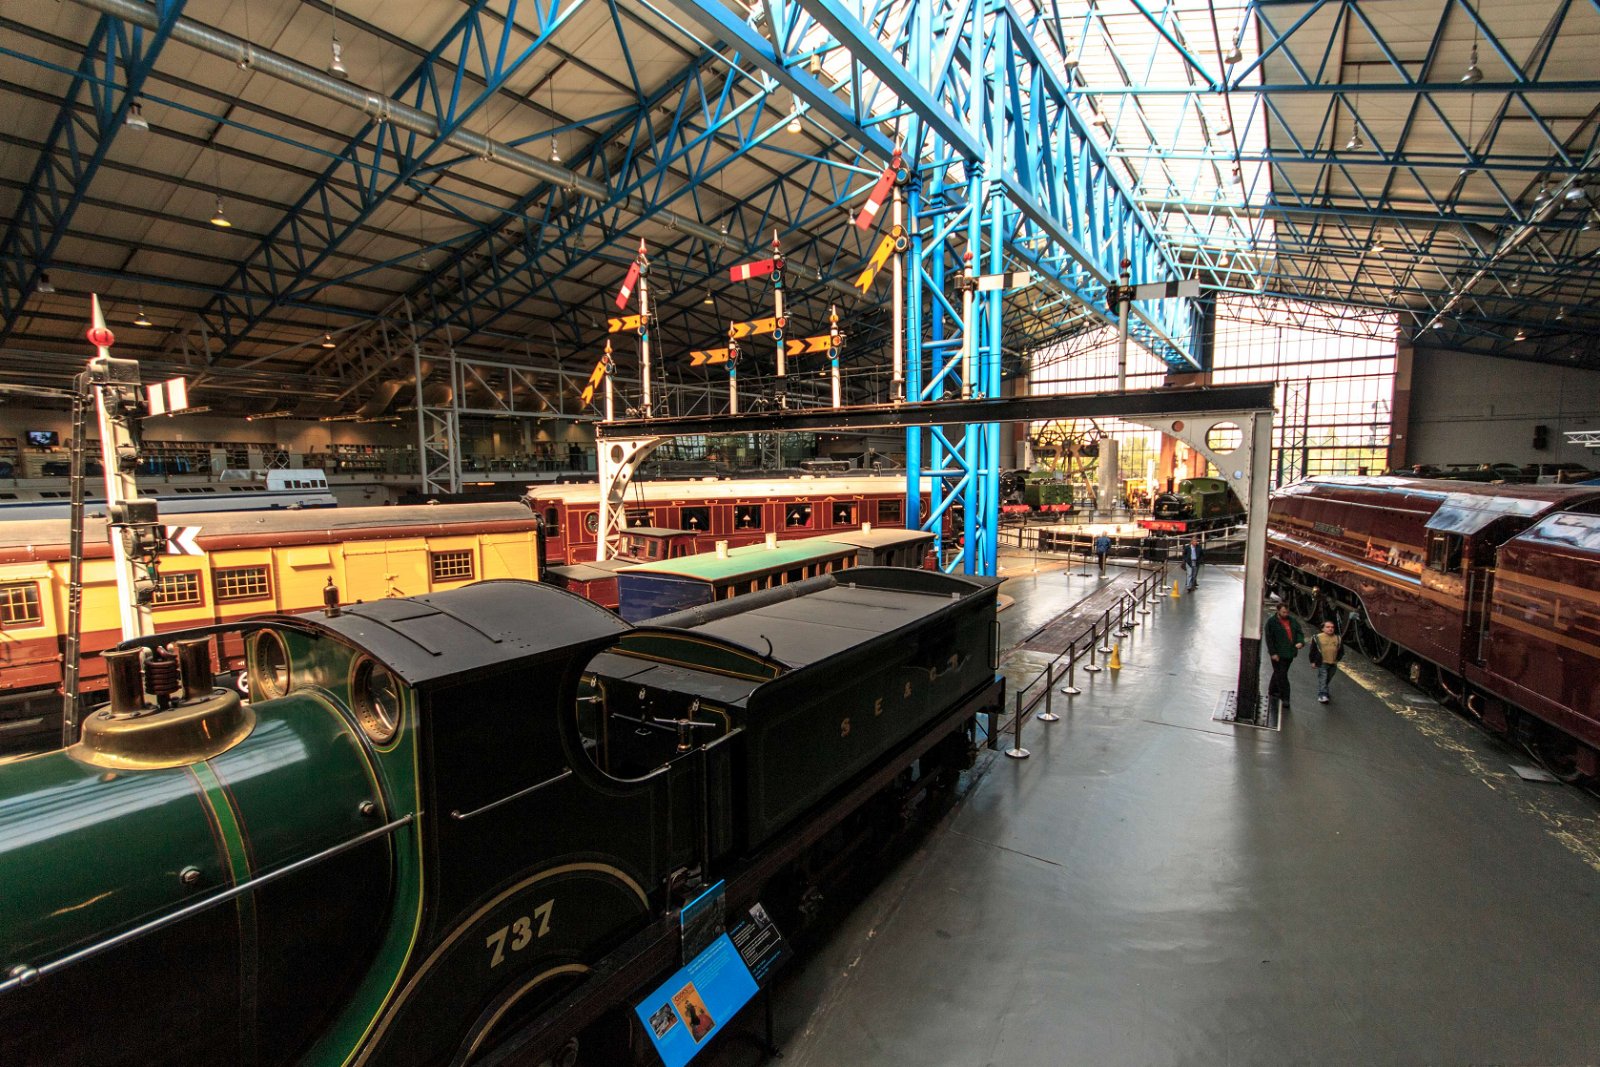 National Railway Museum (York) - Visitor Information & Reviews